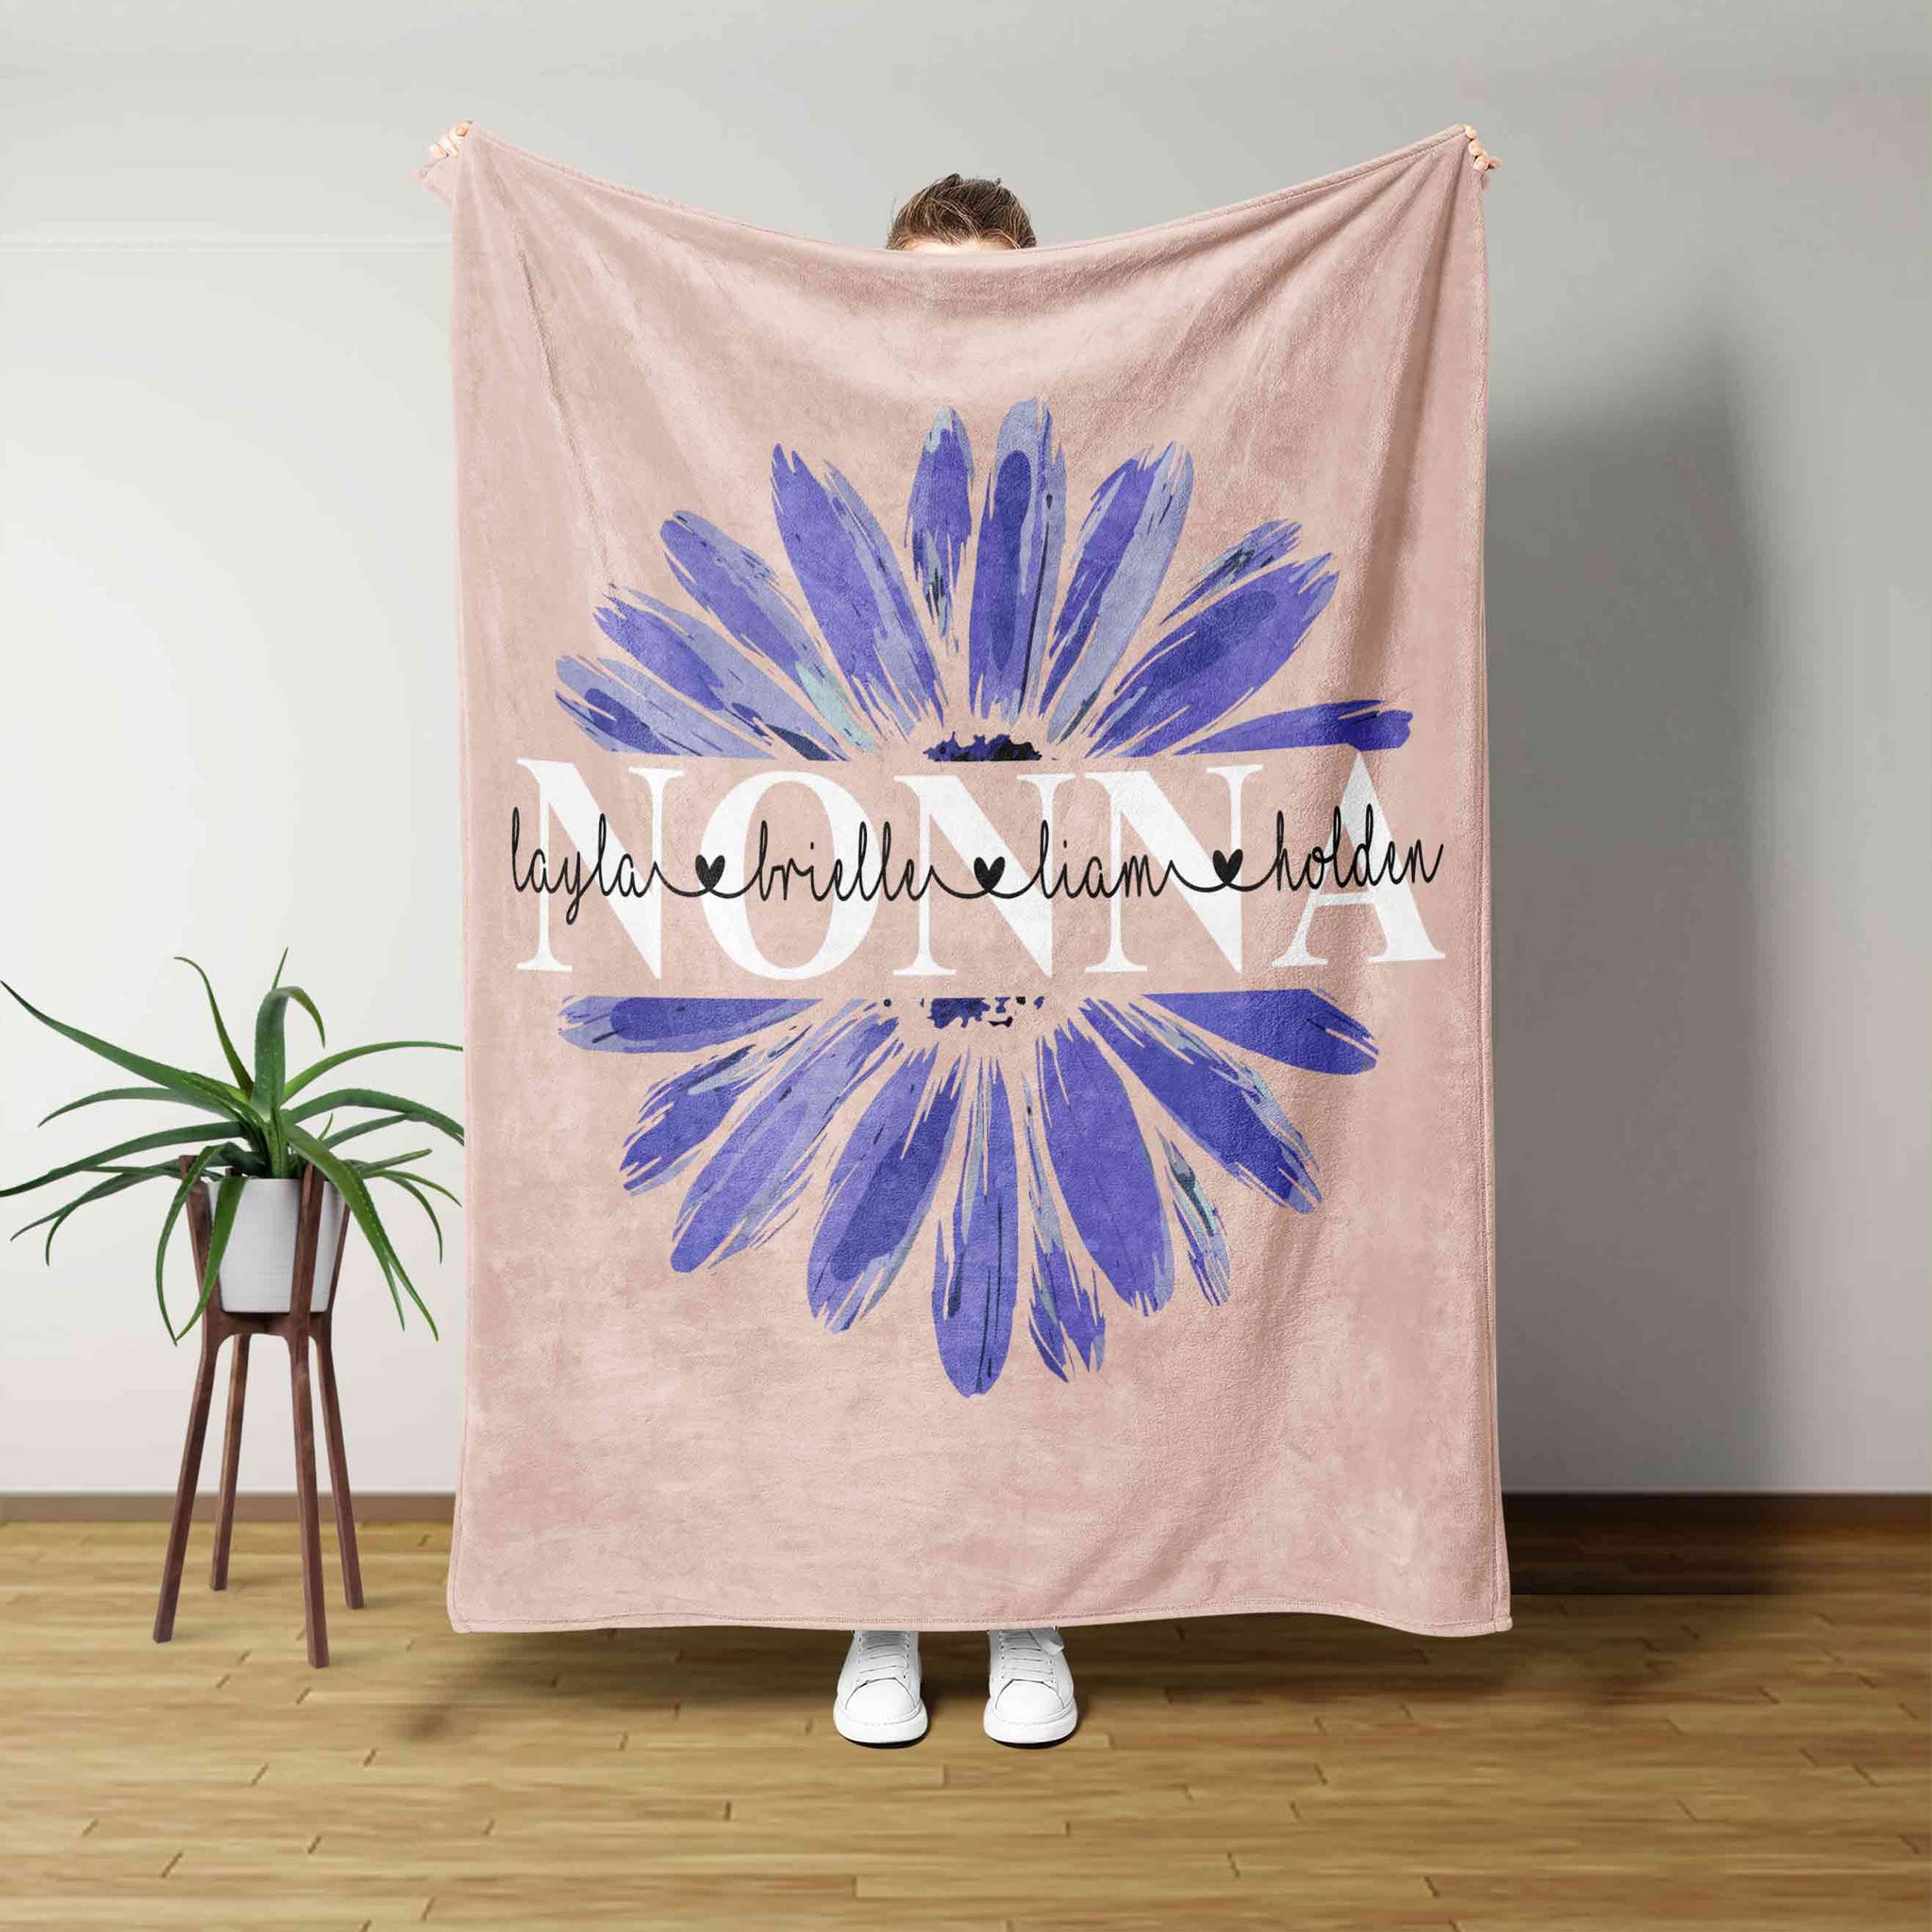 Personalized Name Blanket, Nonna Blanket, Flower Blanket, Family Blanket, Gift Blanket